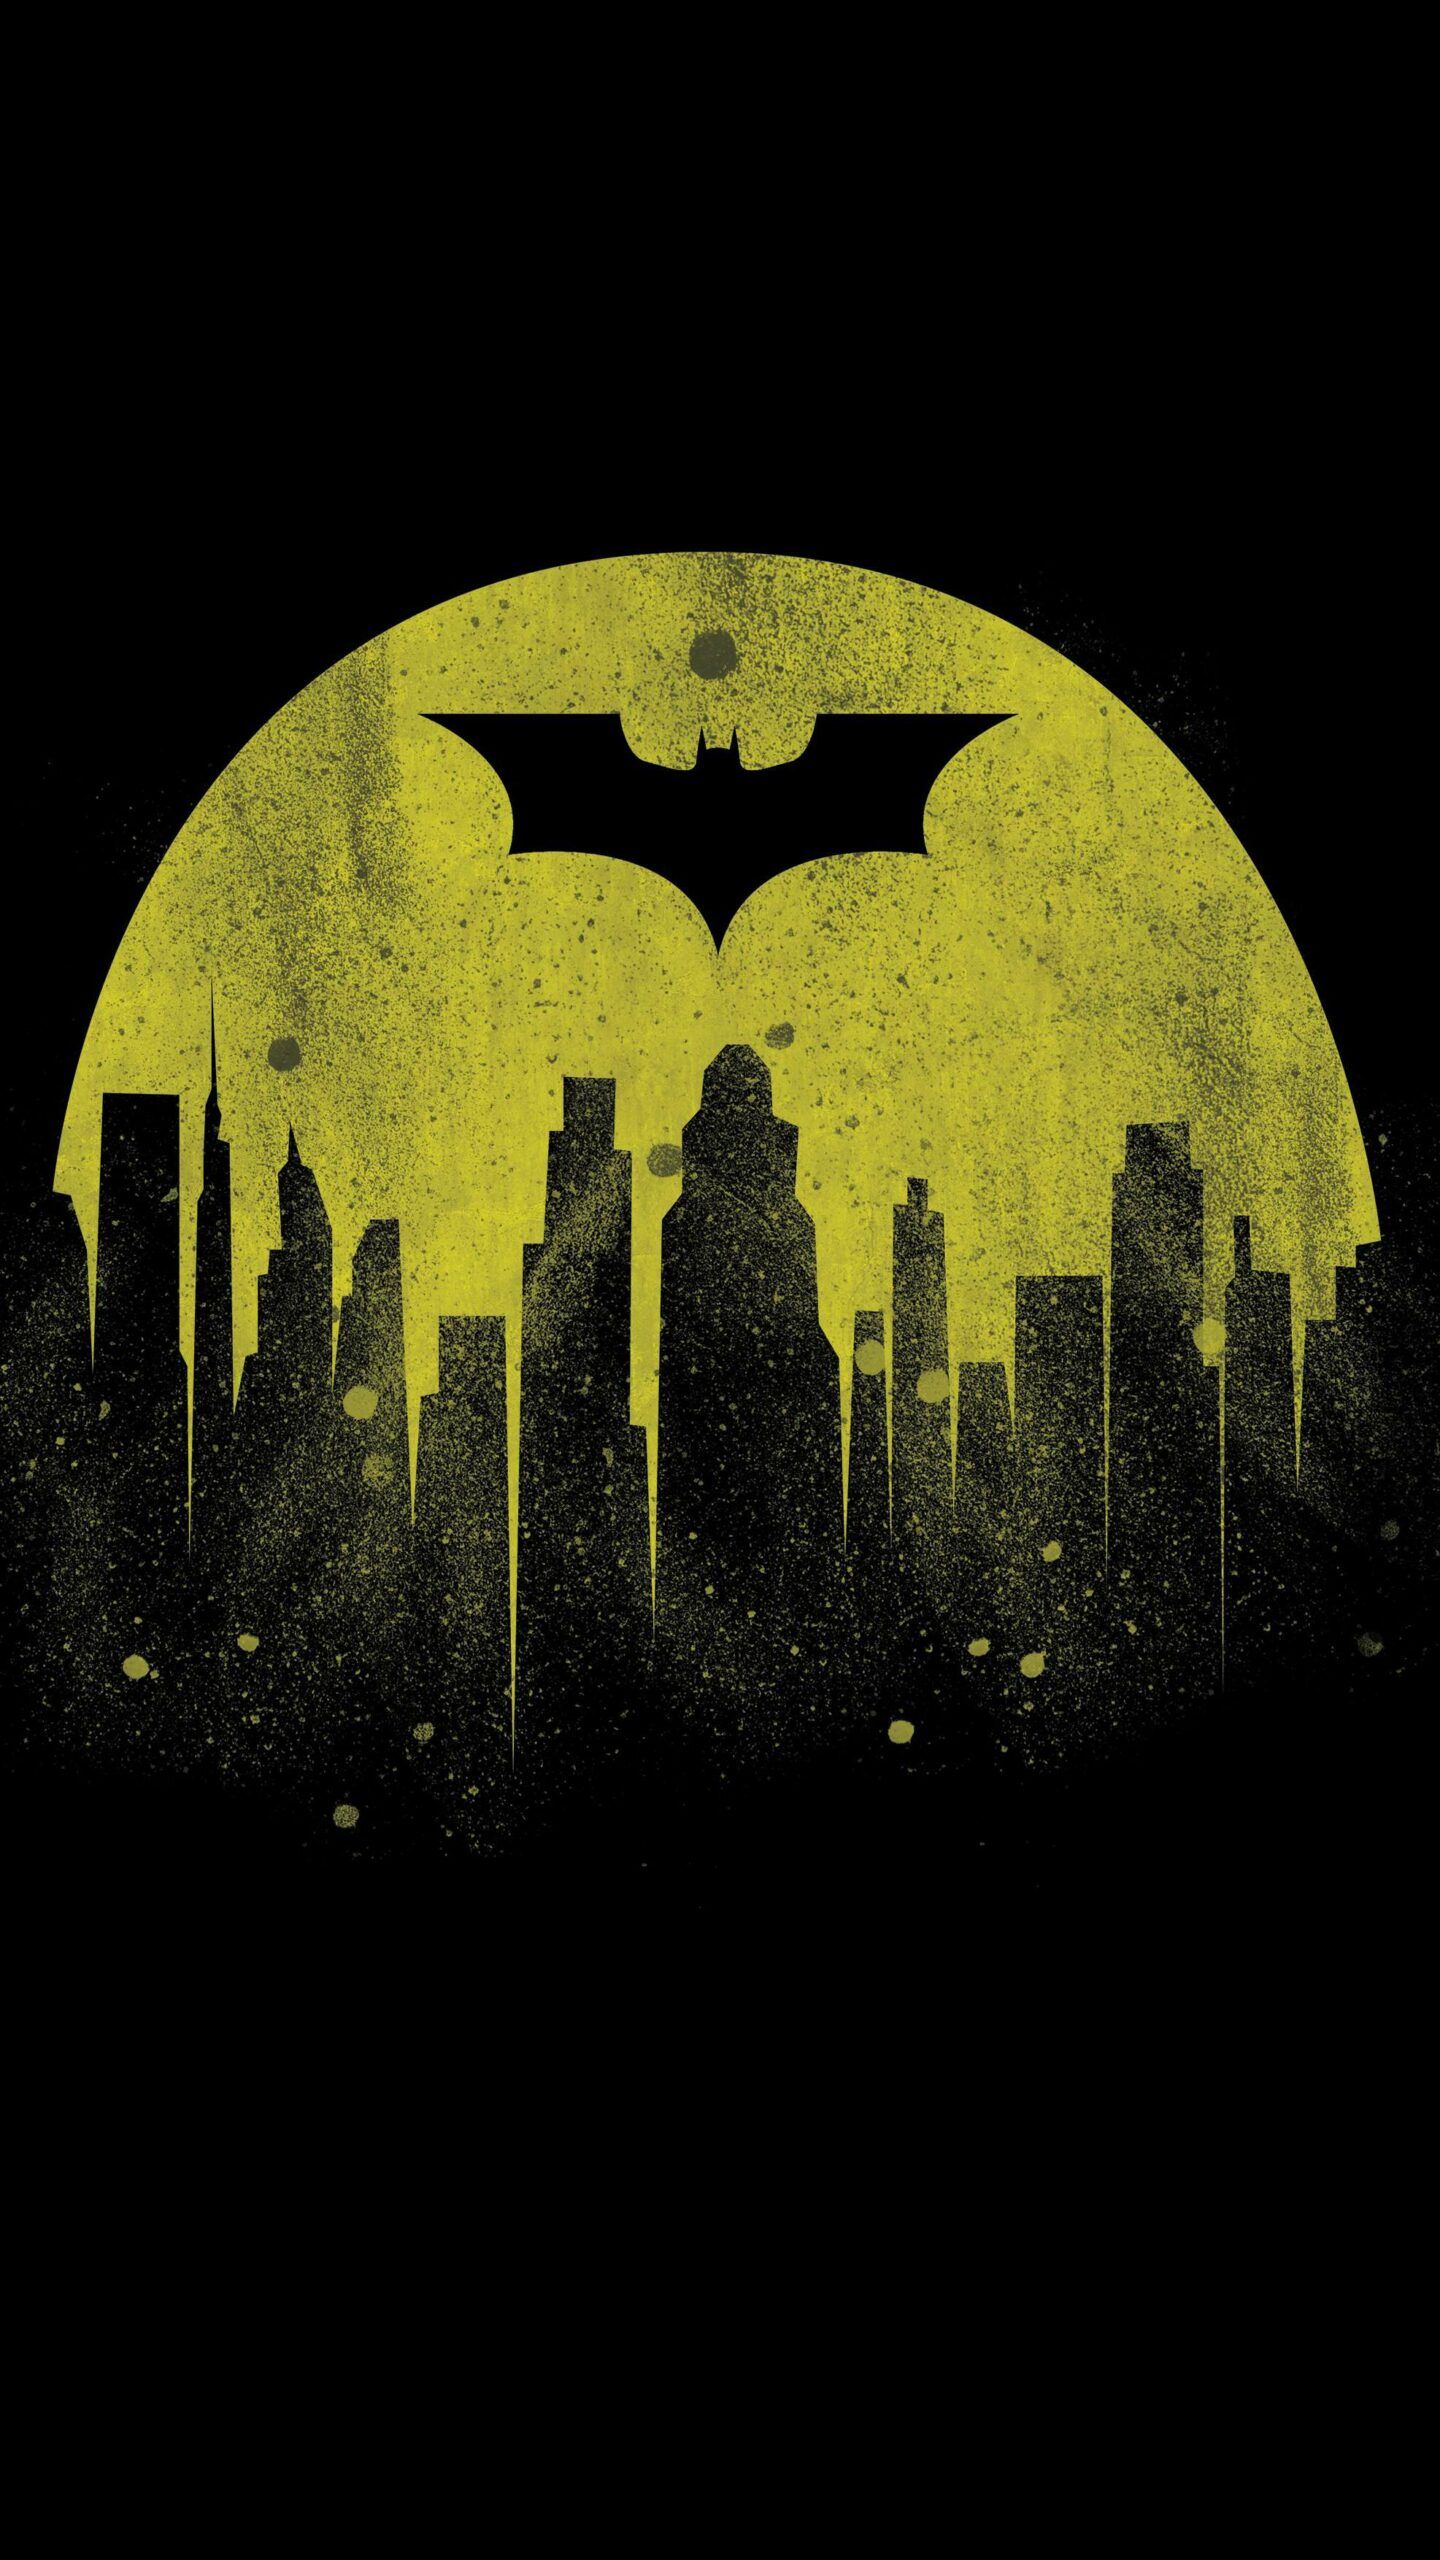 The Batman Dc Comic 2020 Wallpapers